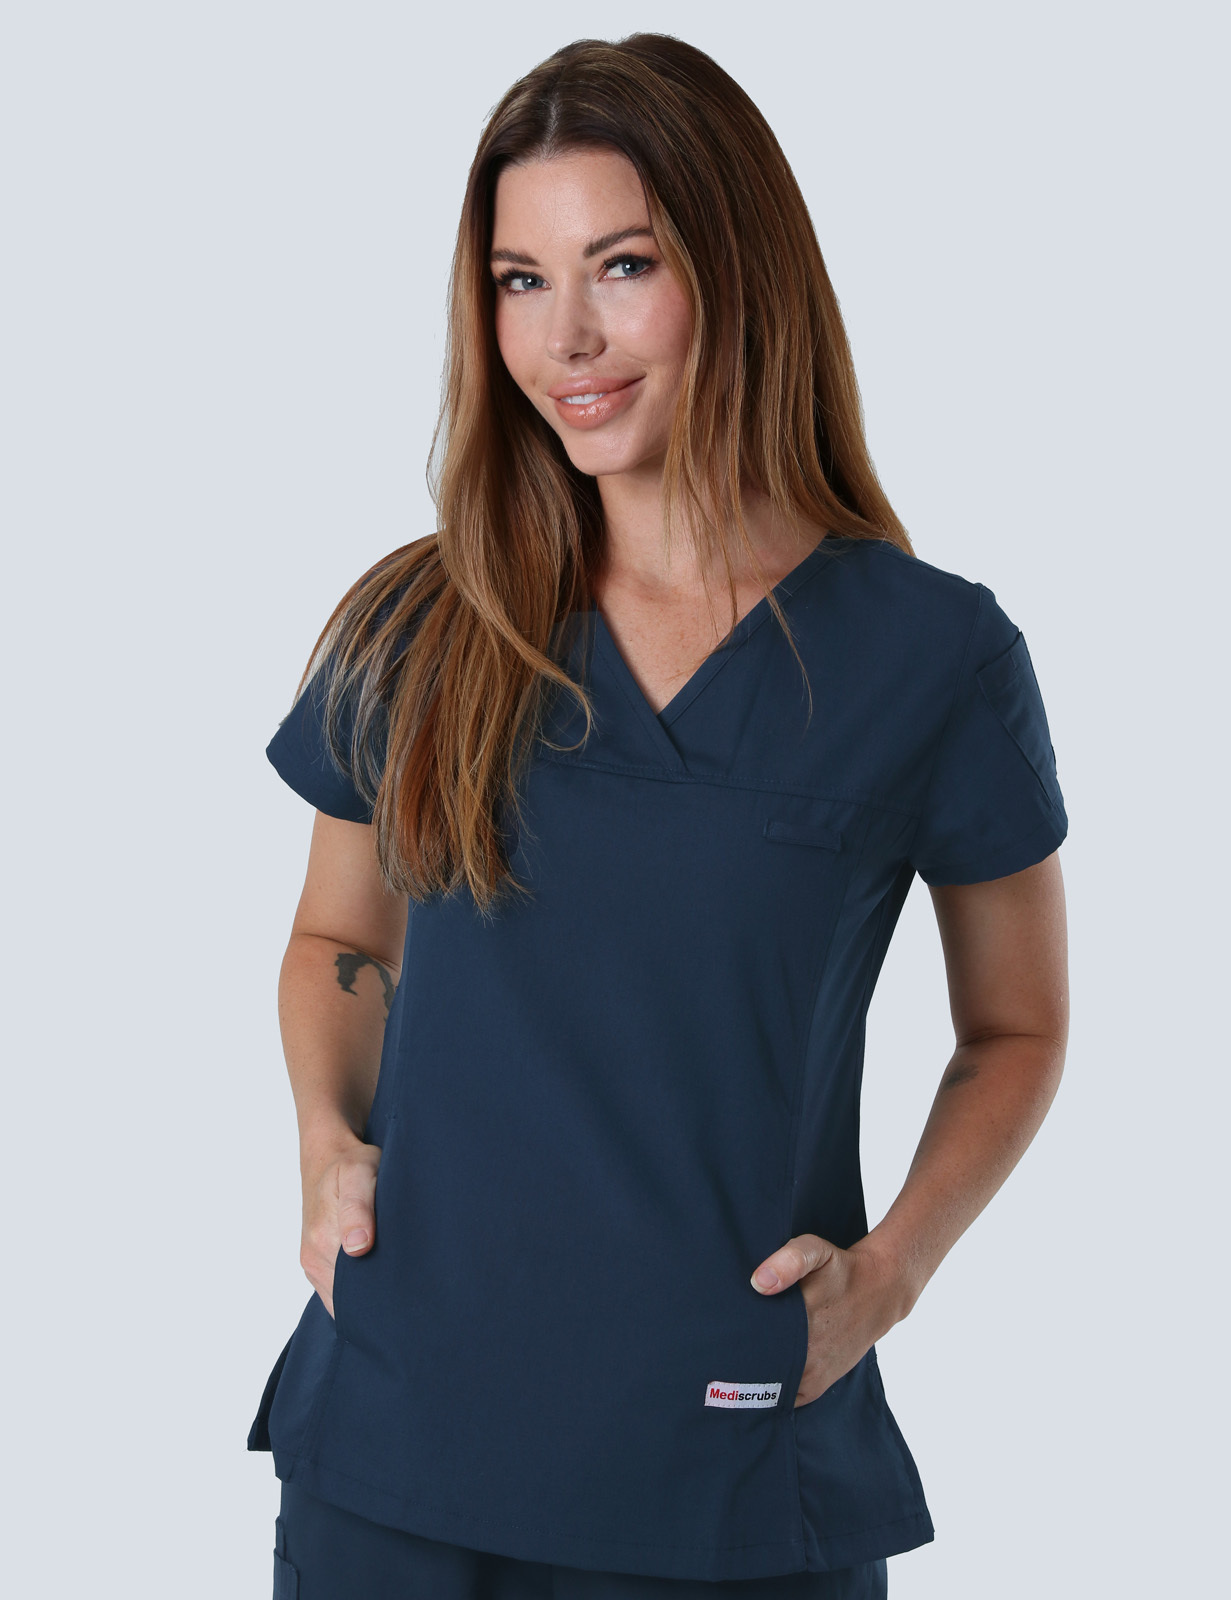 Bundaberg Hospital - MI Admin (Women's Fit Solid Scrub Top and Cargo Pants in Navy incl Logos)